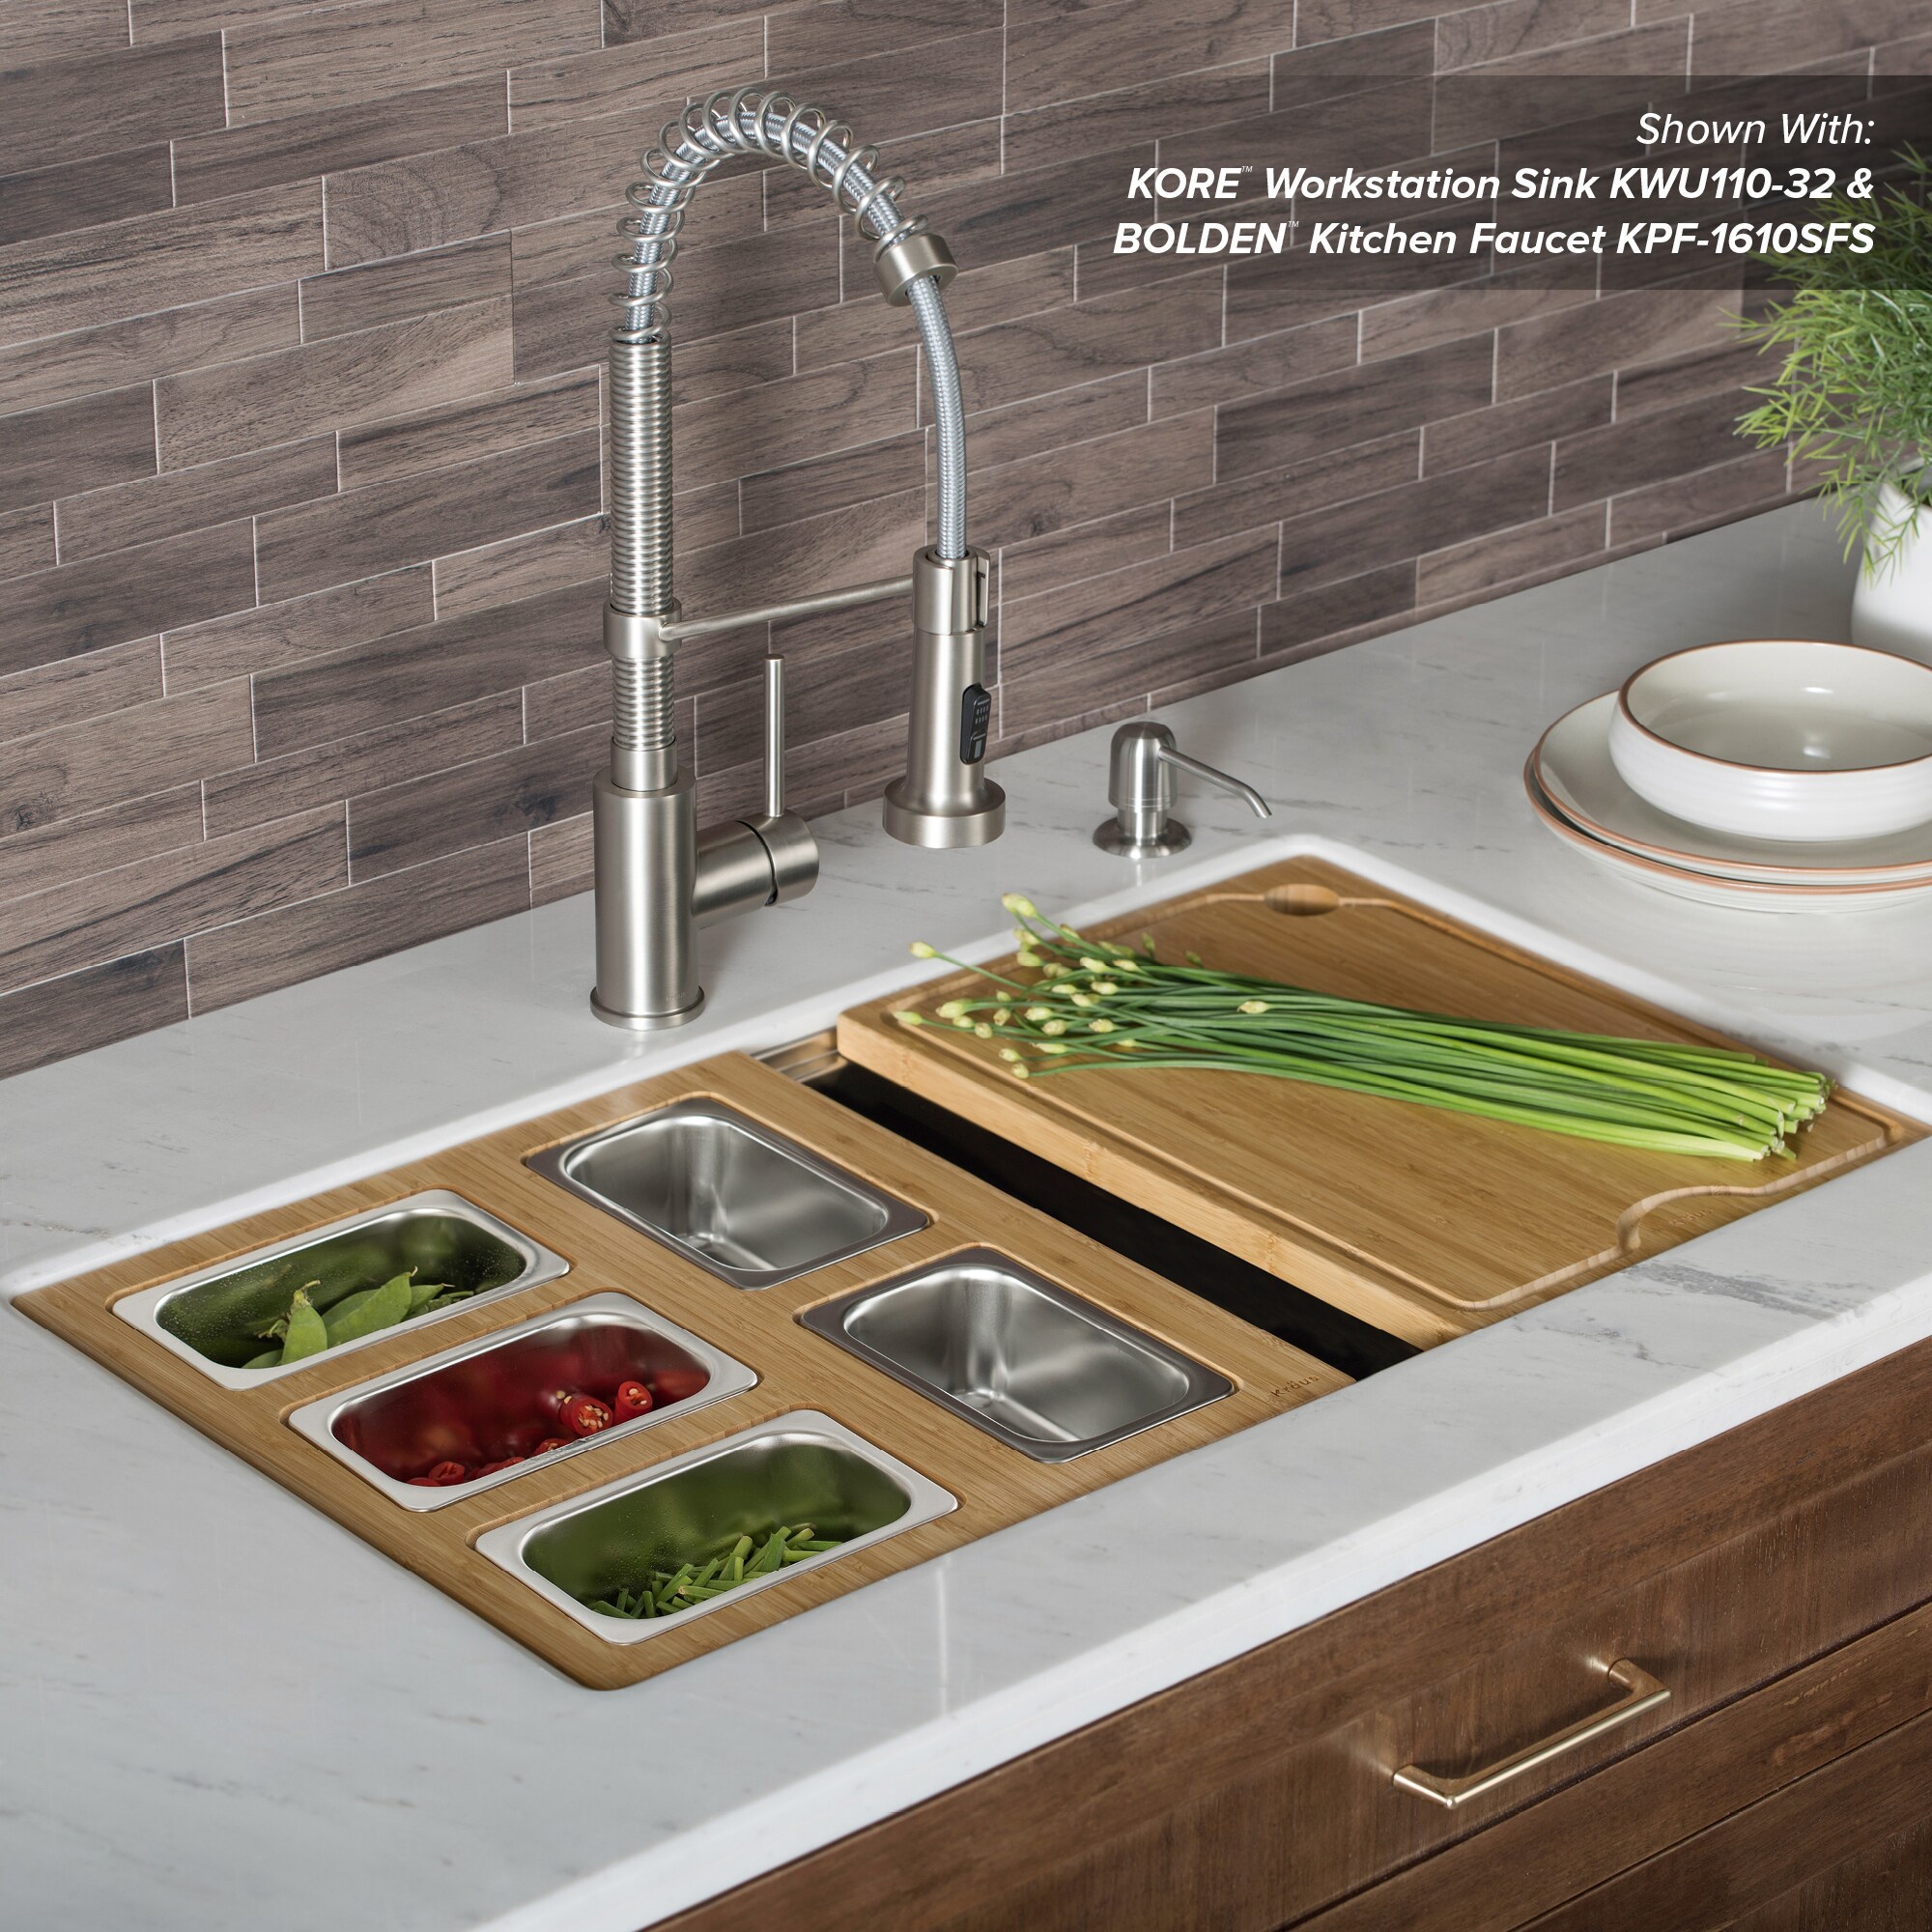 Kraus Workstation Kitchen Sink 11 in. Solid Bamboo Cutting Board